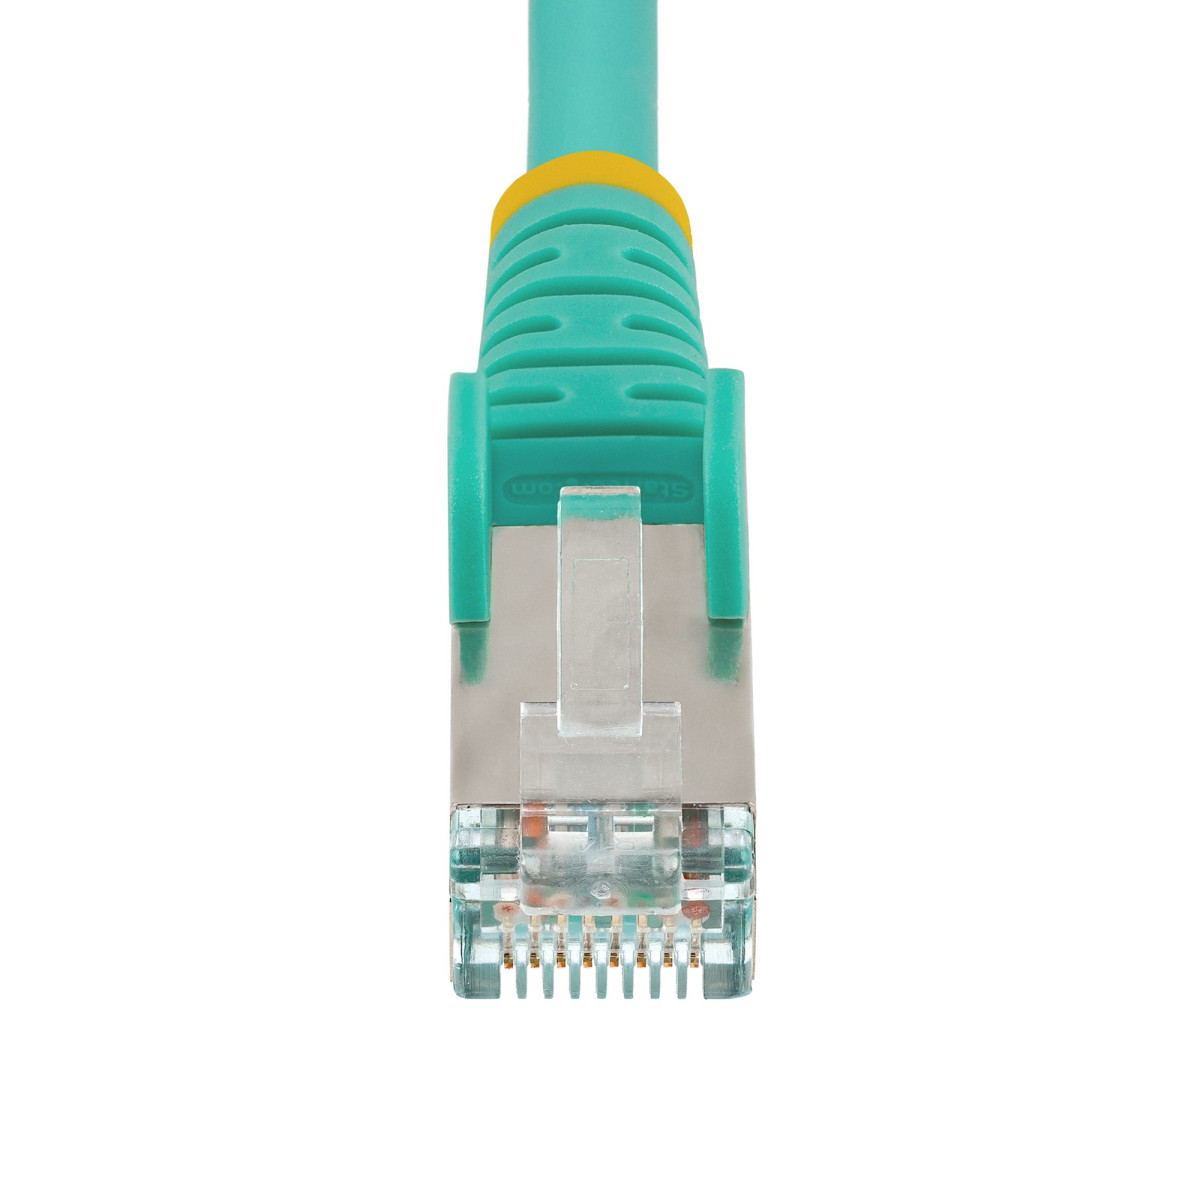 1m LSZH CAT6a Ethernet Cable - Aqua